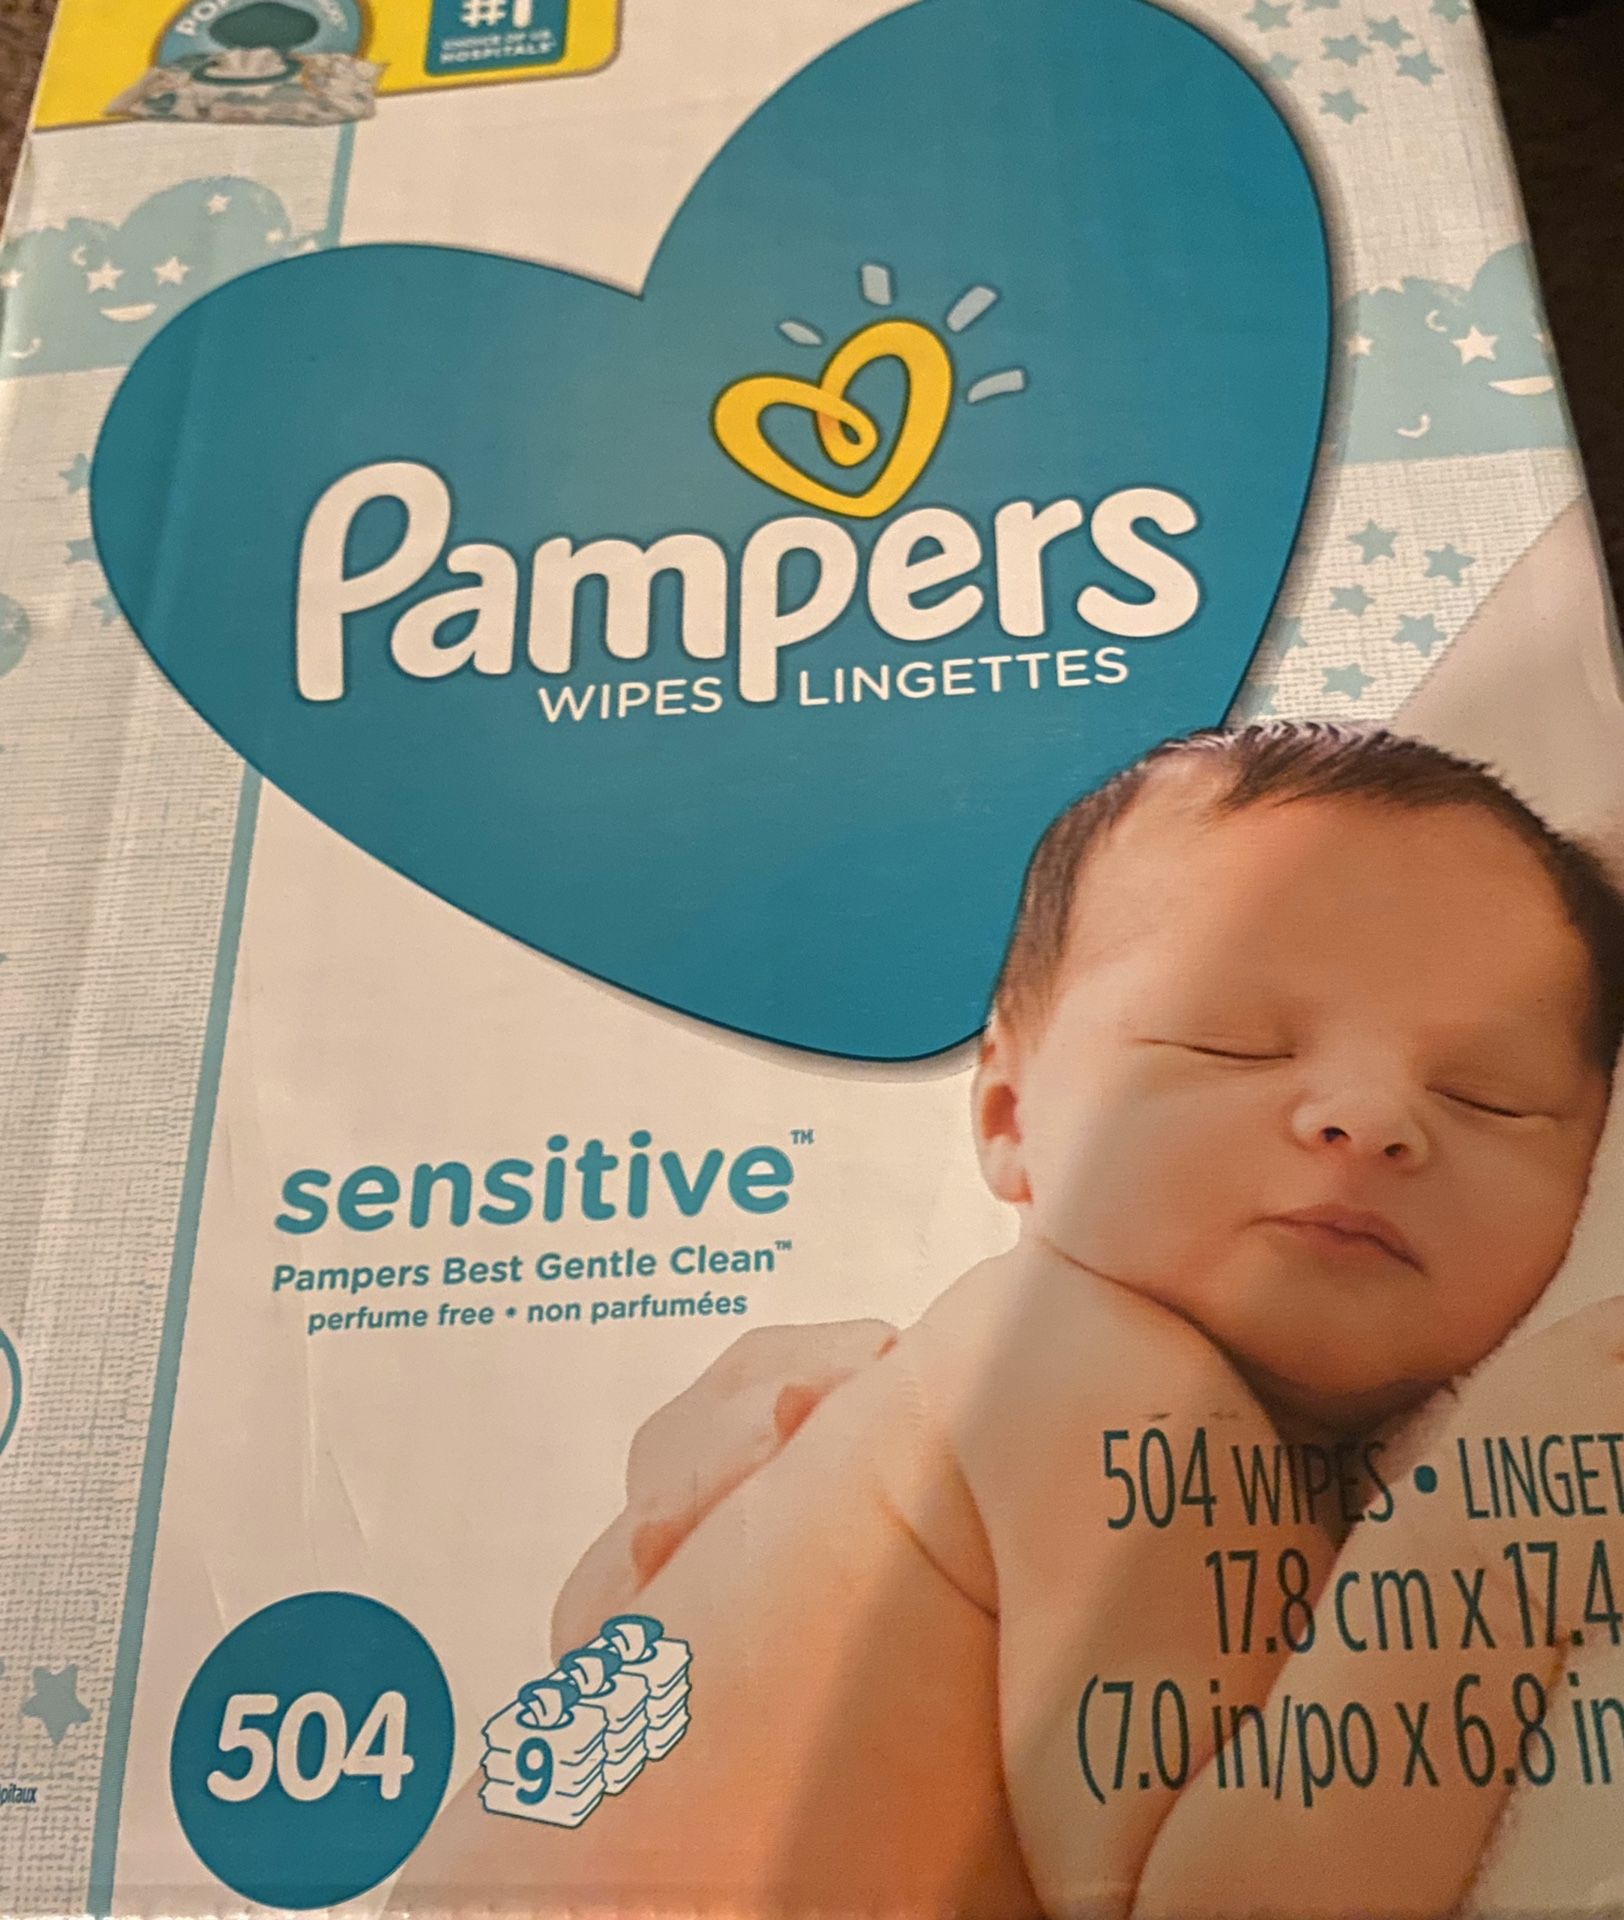 Pamper wipes